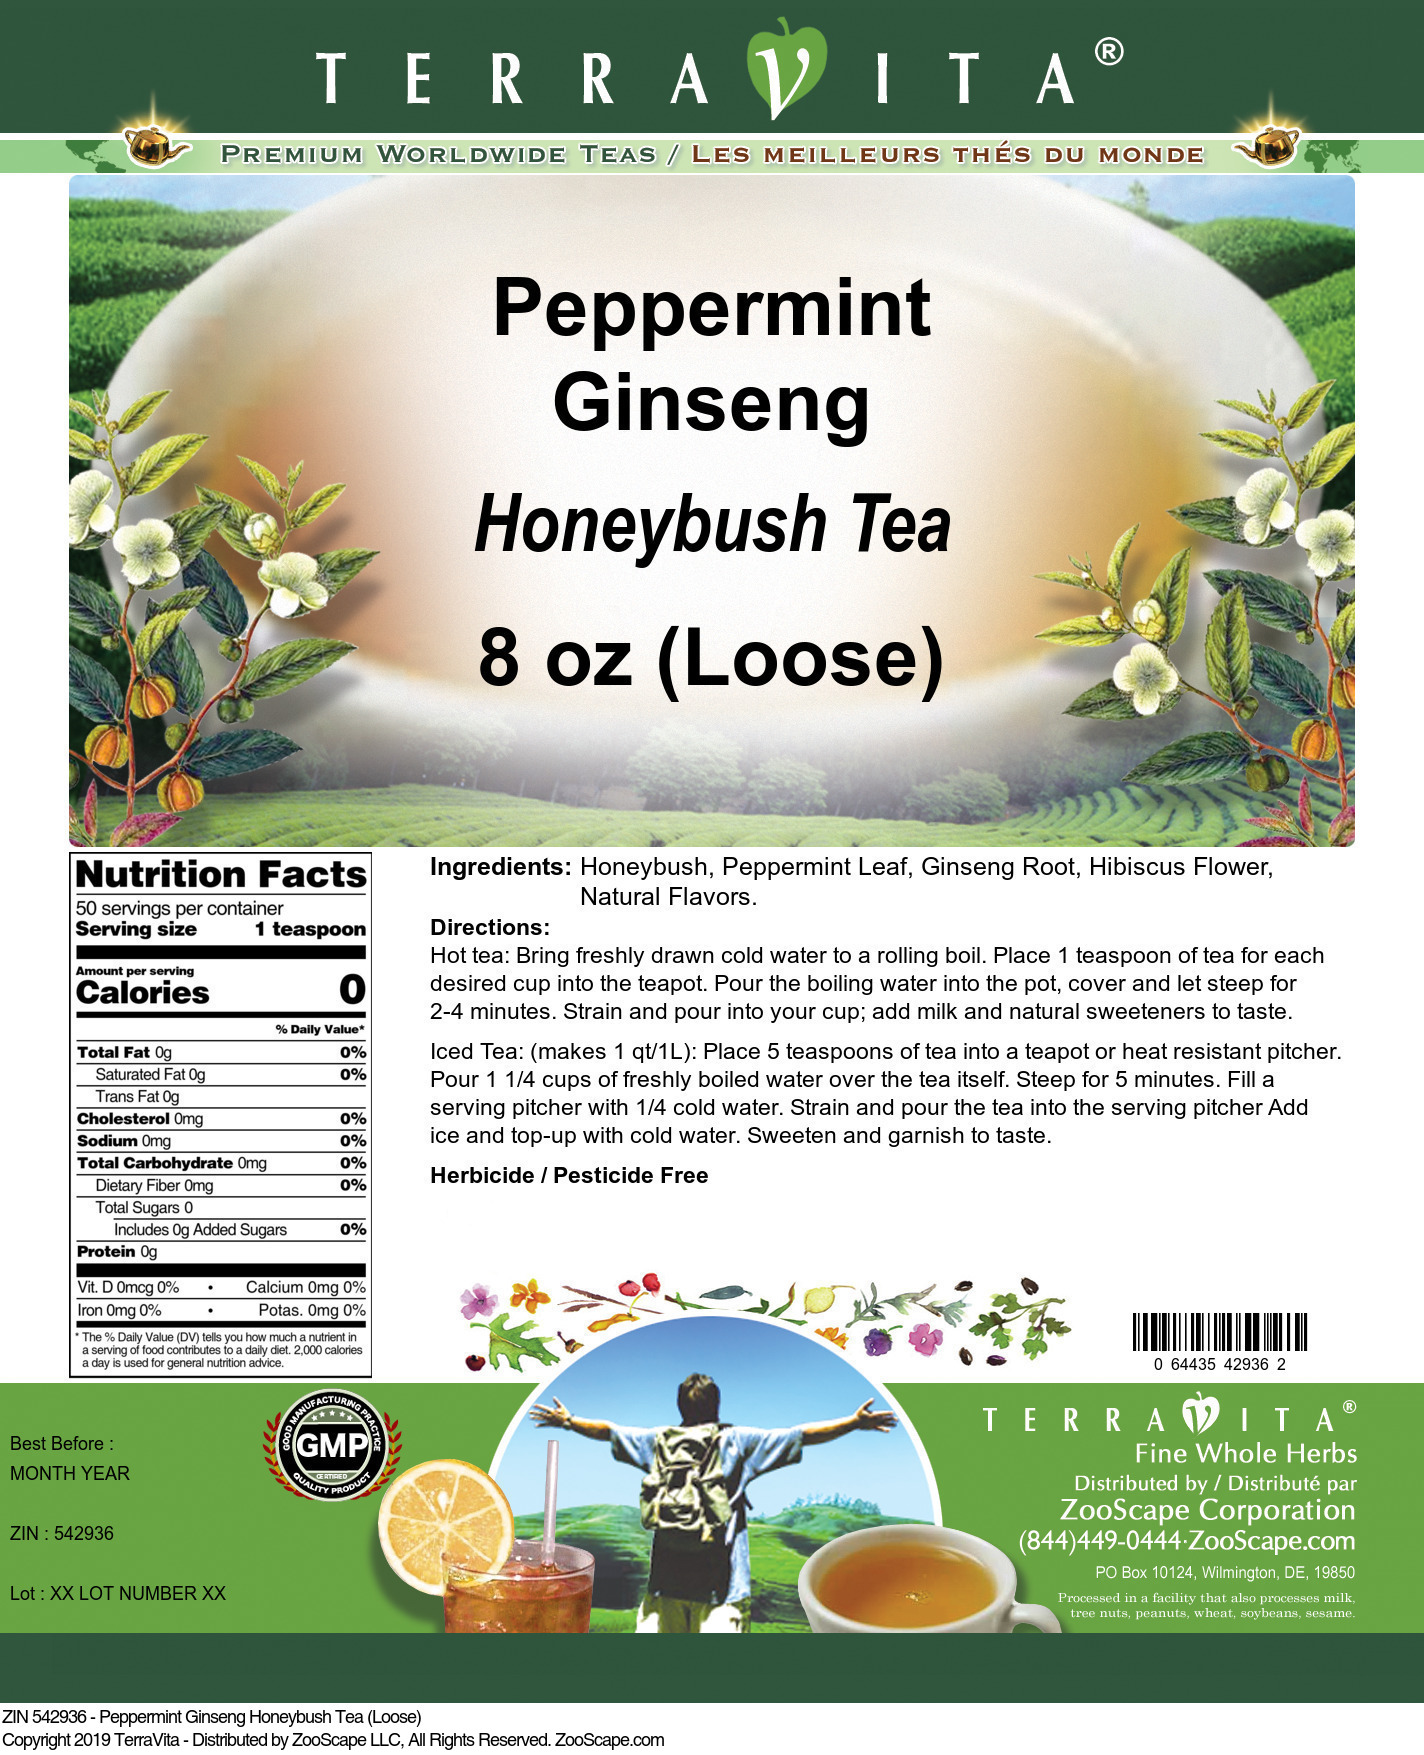 Peppermint Ginseng Honeybush Tea (Loose) - Label